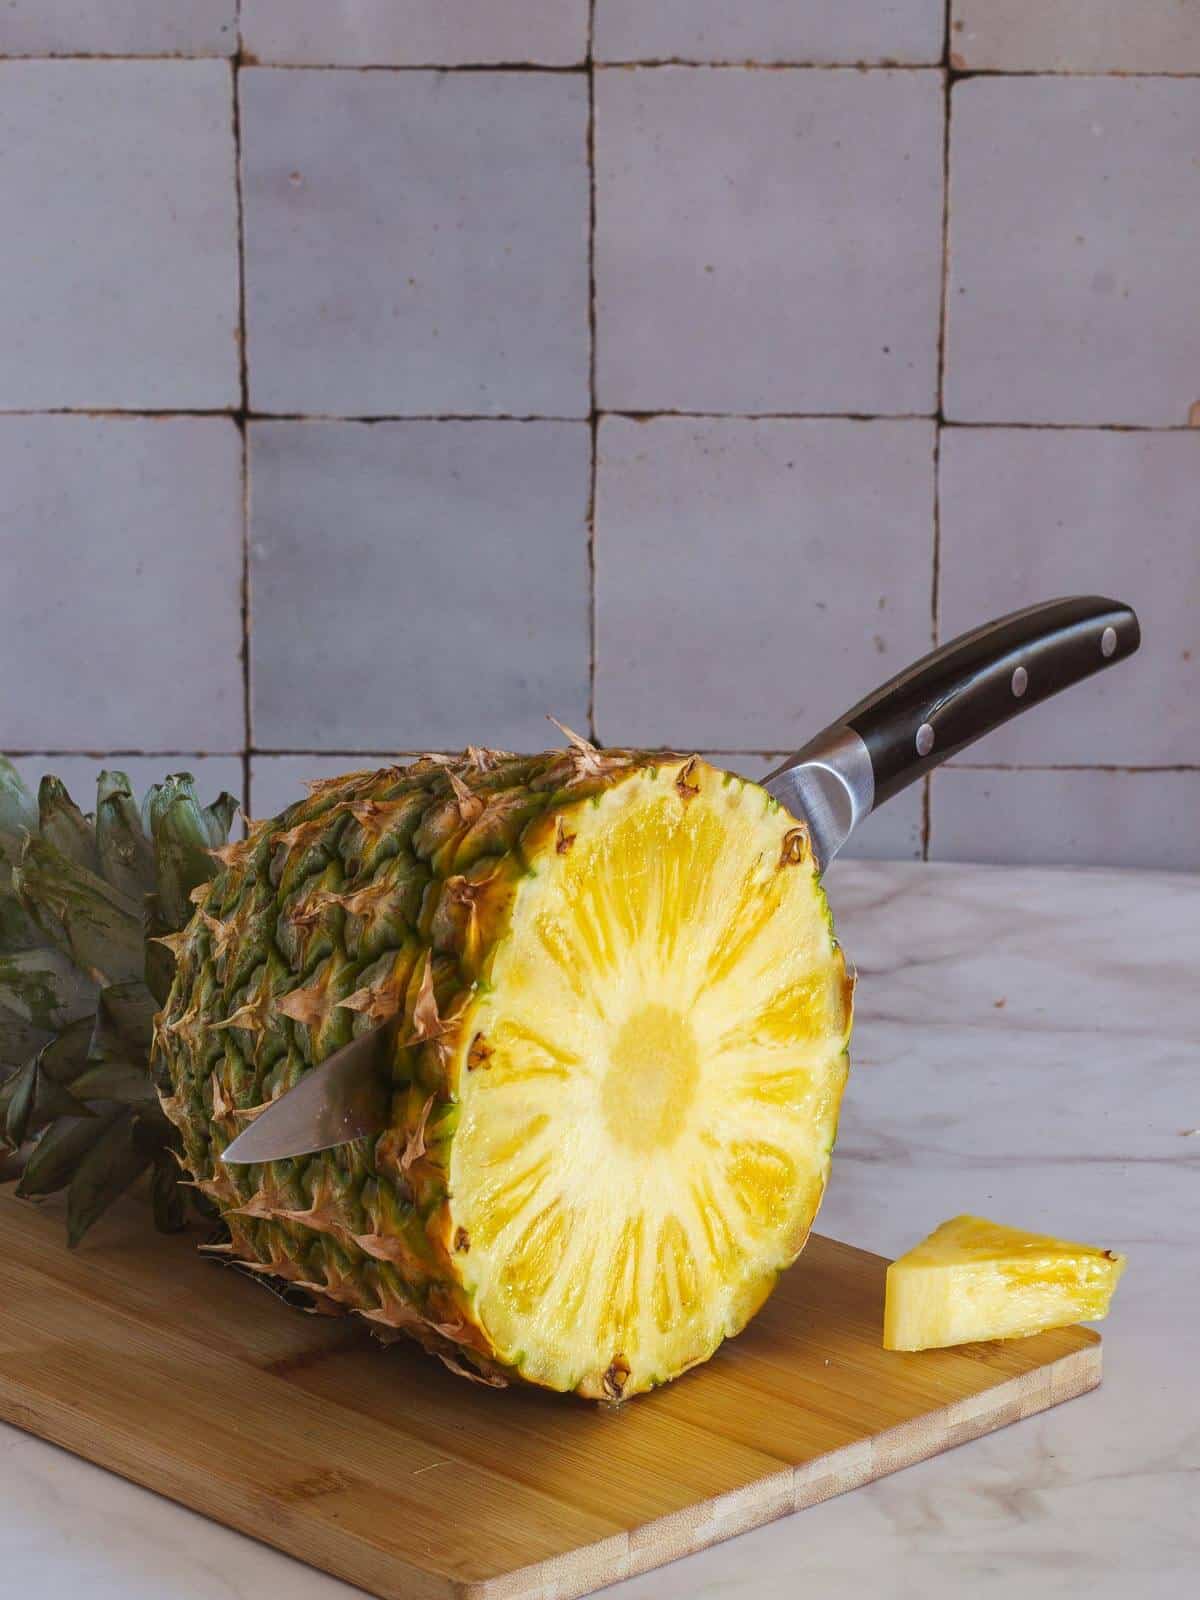 chopping fresh pineapple